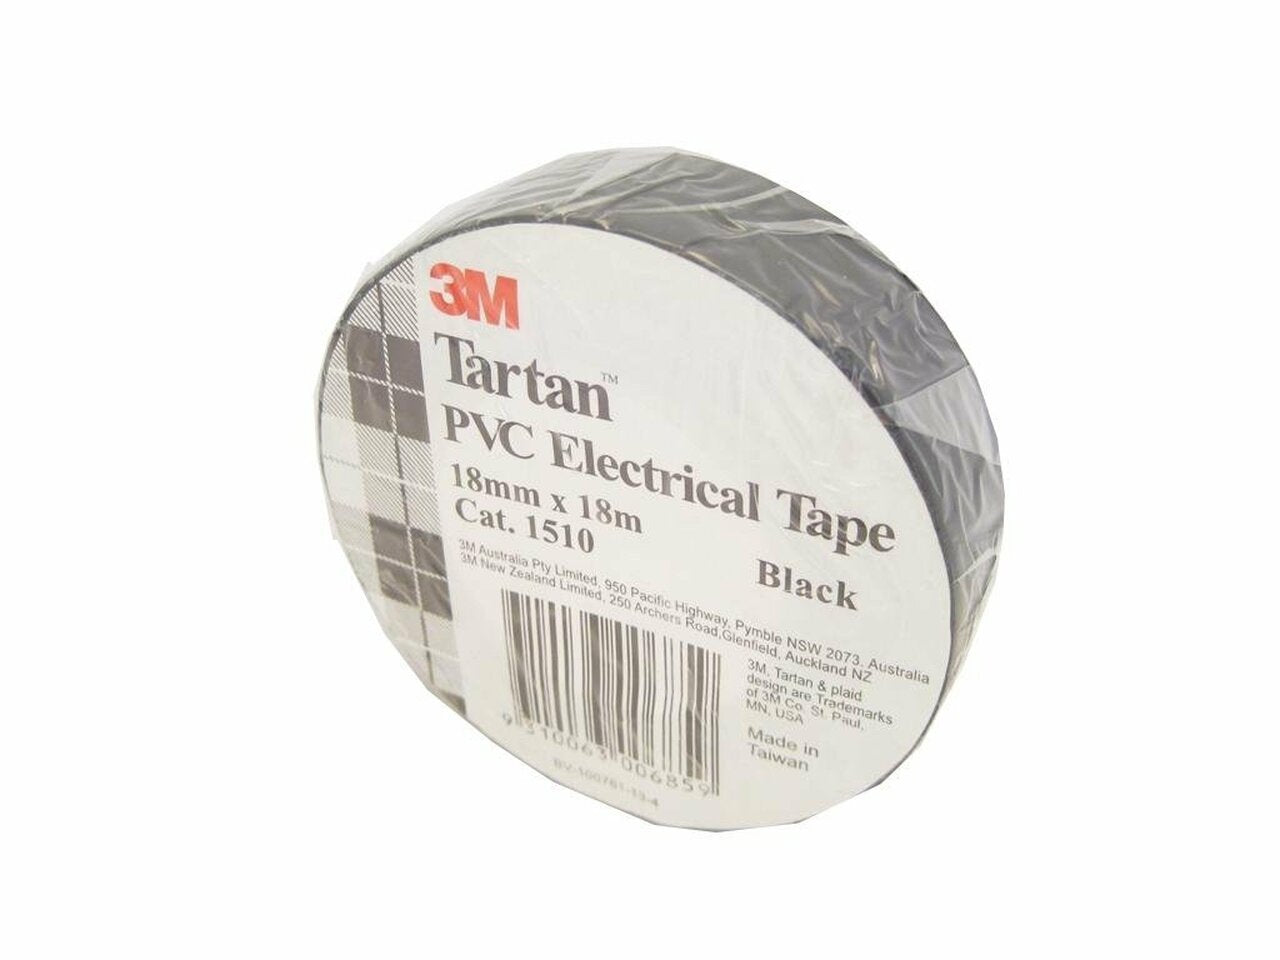 3M Tartan PVC Electrical Tape 18mmX18m Black Cat.1510 AT010575291 - DoubleBayHardware